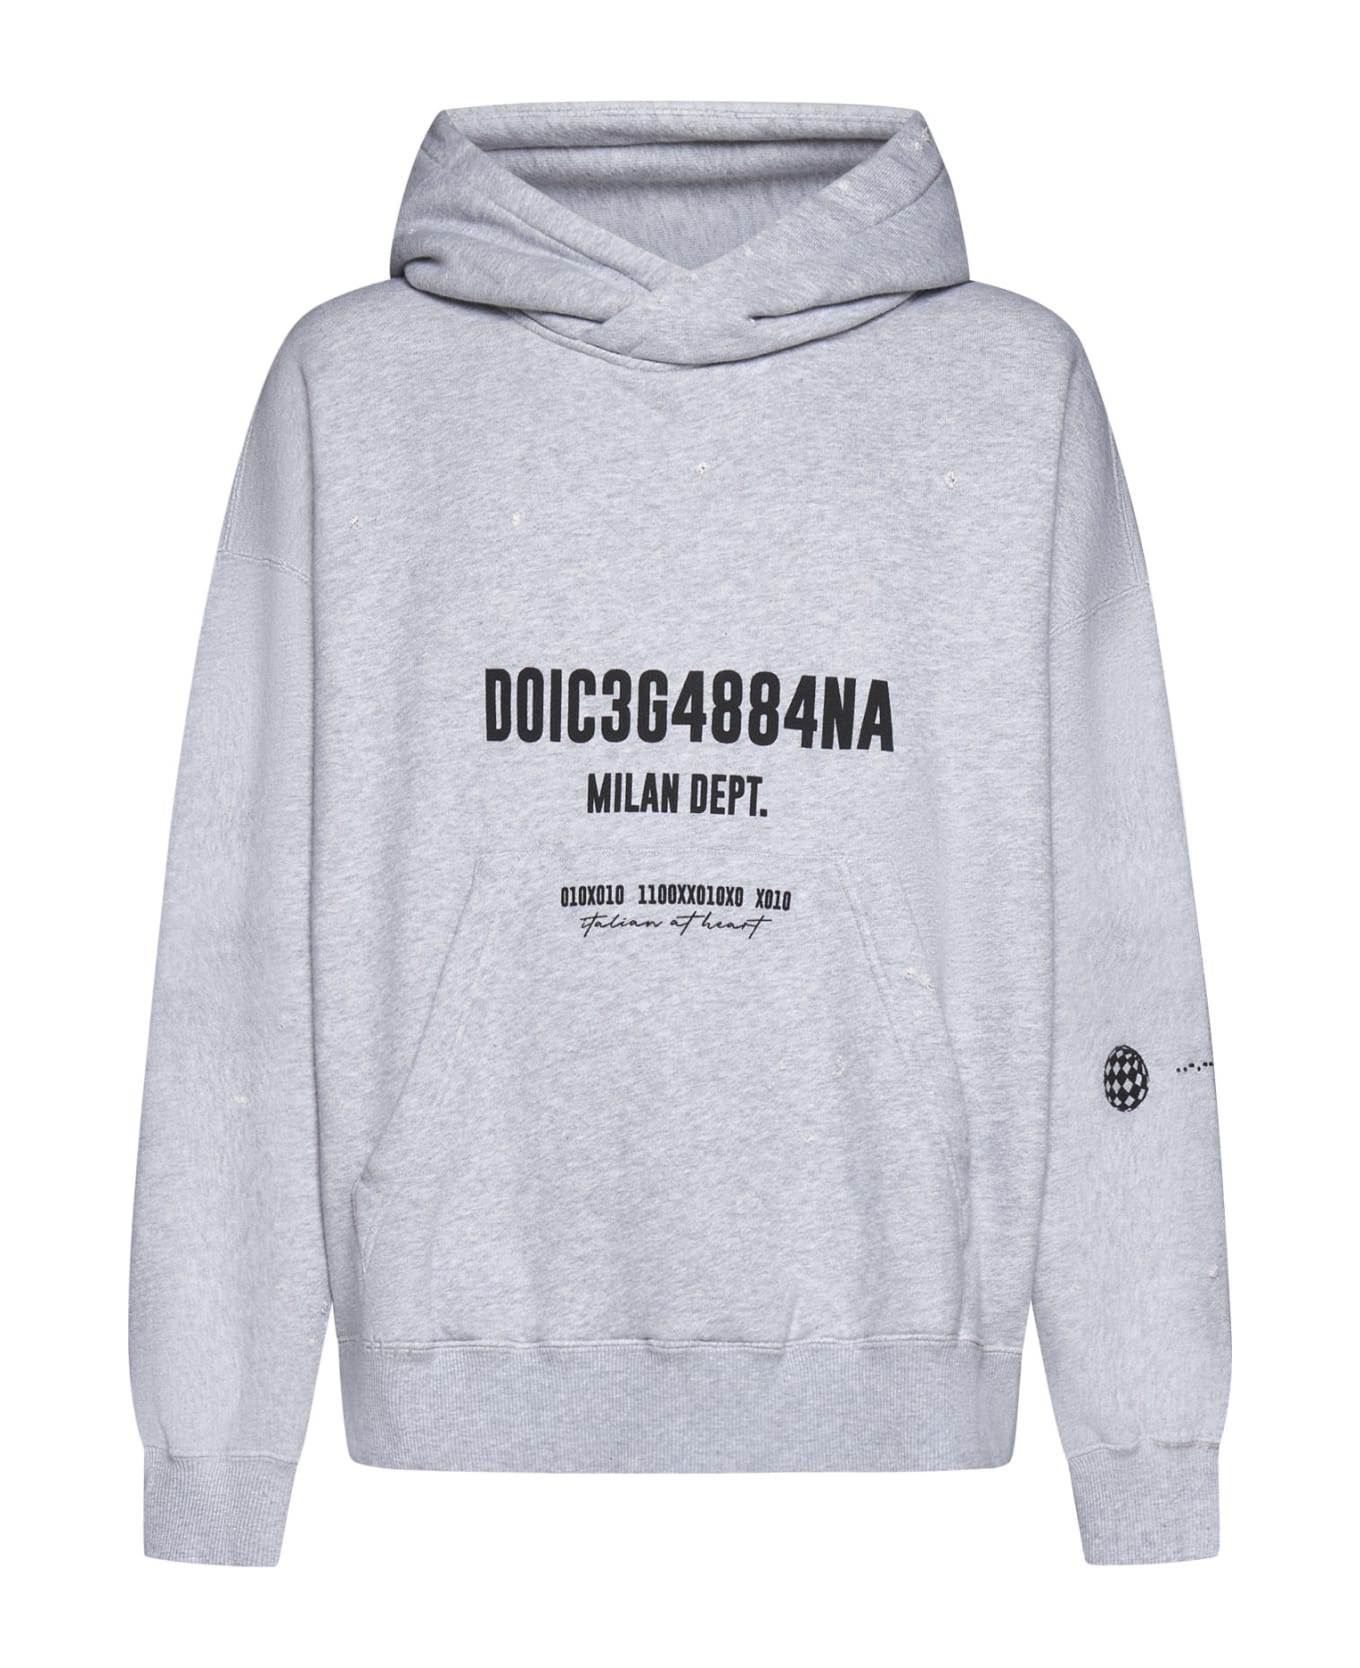 Dolce & Gabbana Fleece - Melange grigio